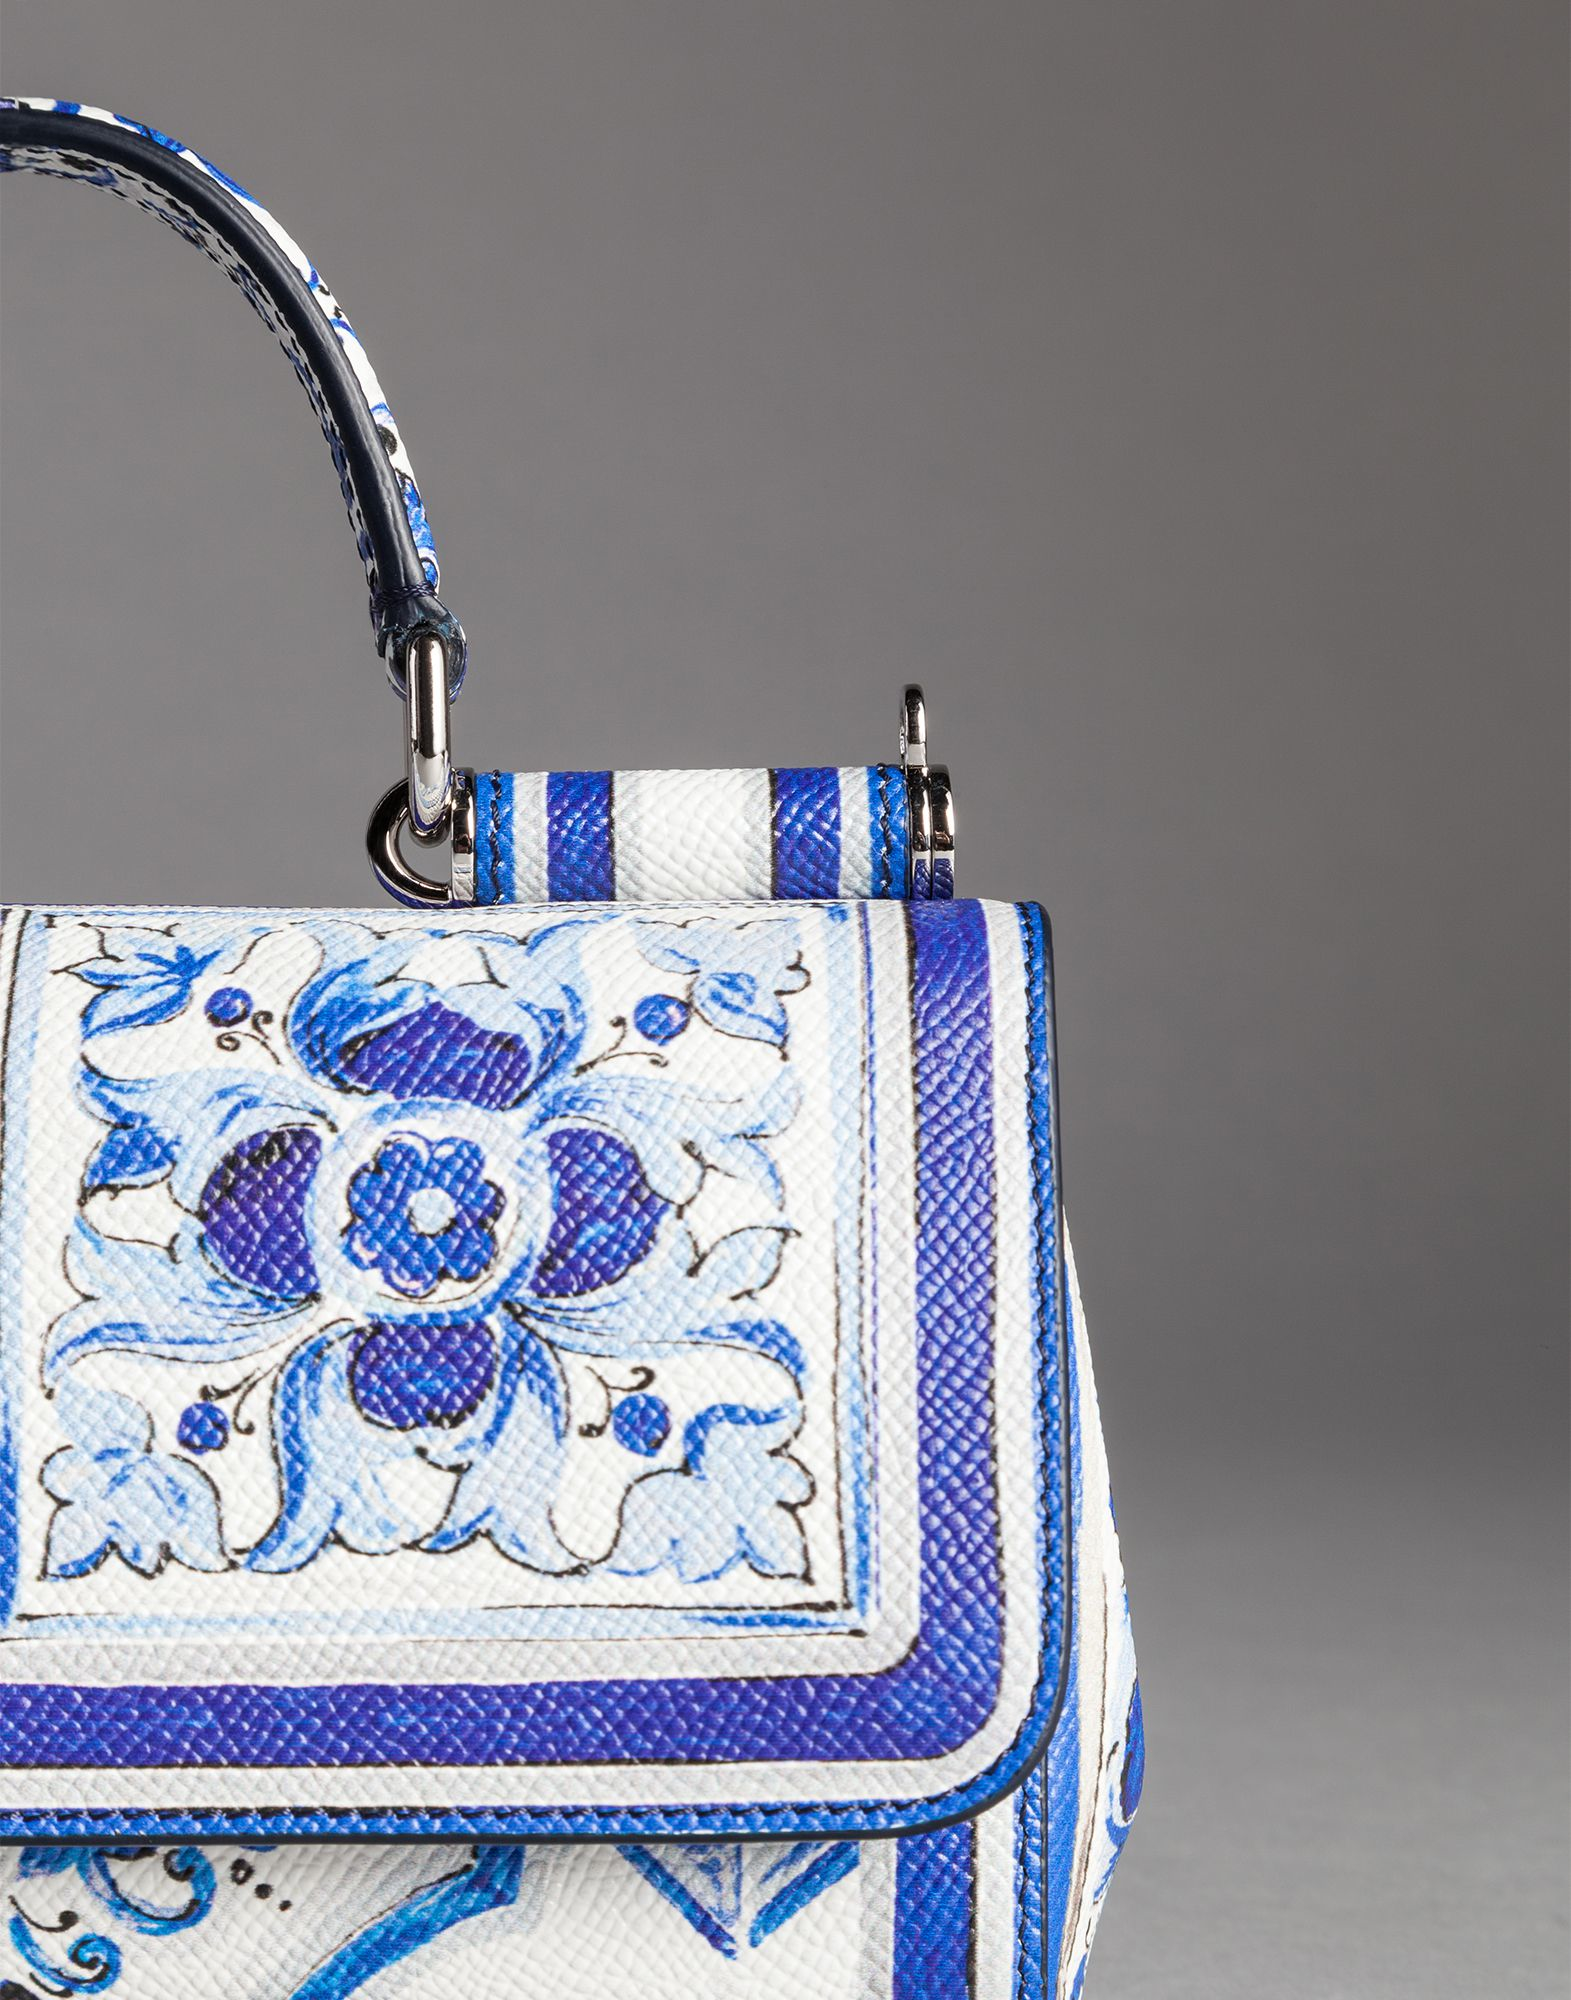 Sicily handbag Dolce & Gabbana Blue in Plastic - 36140102